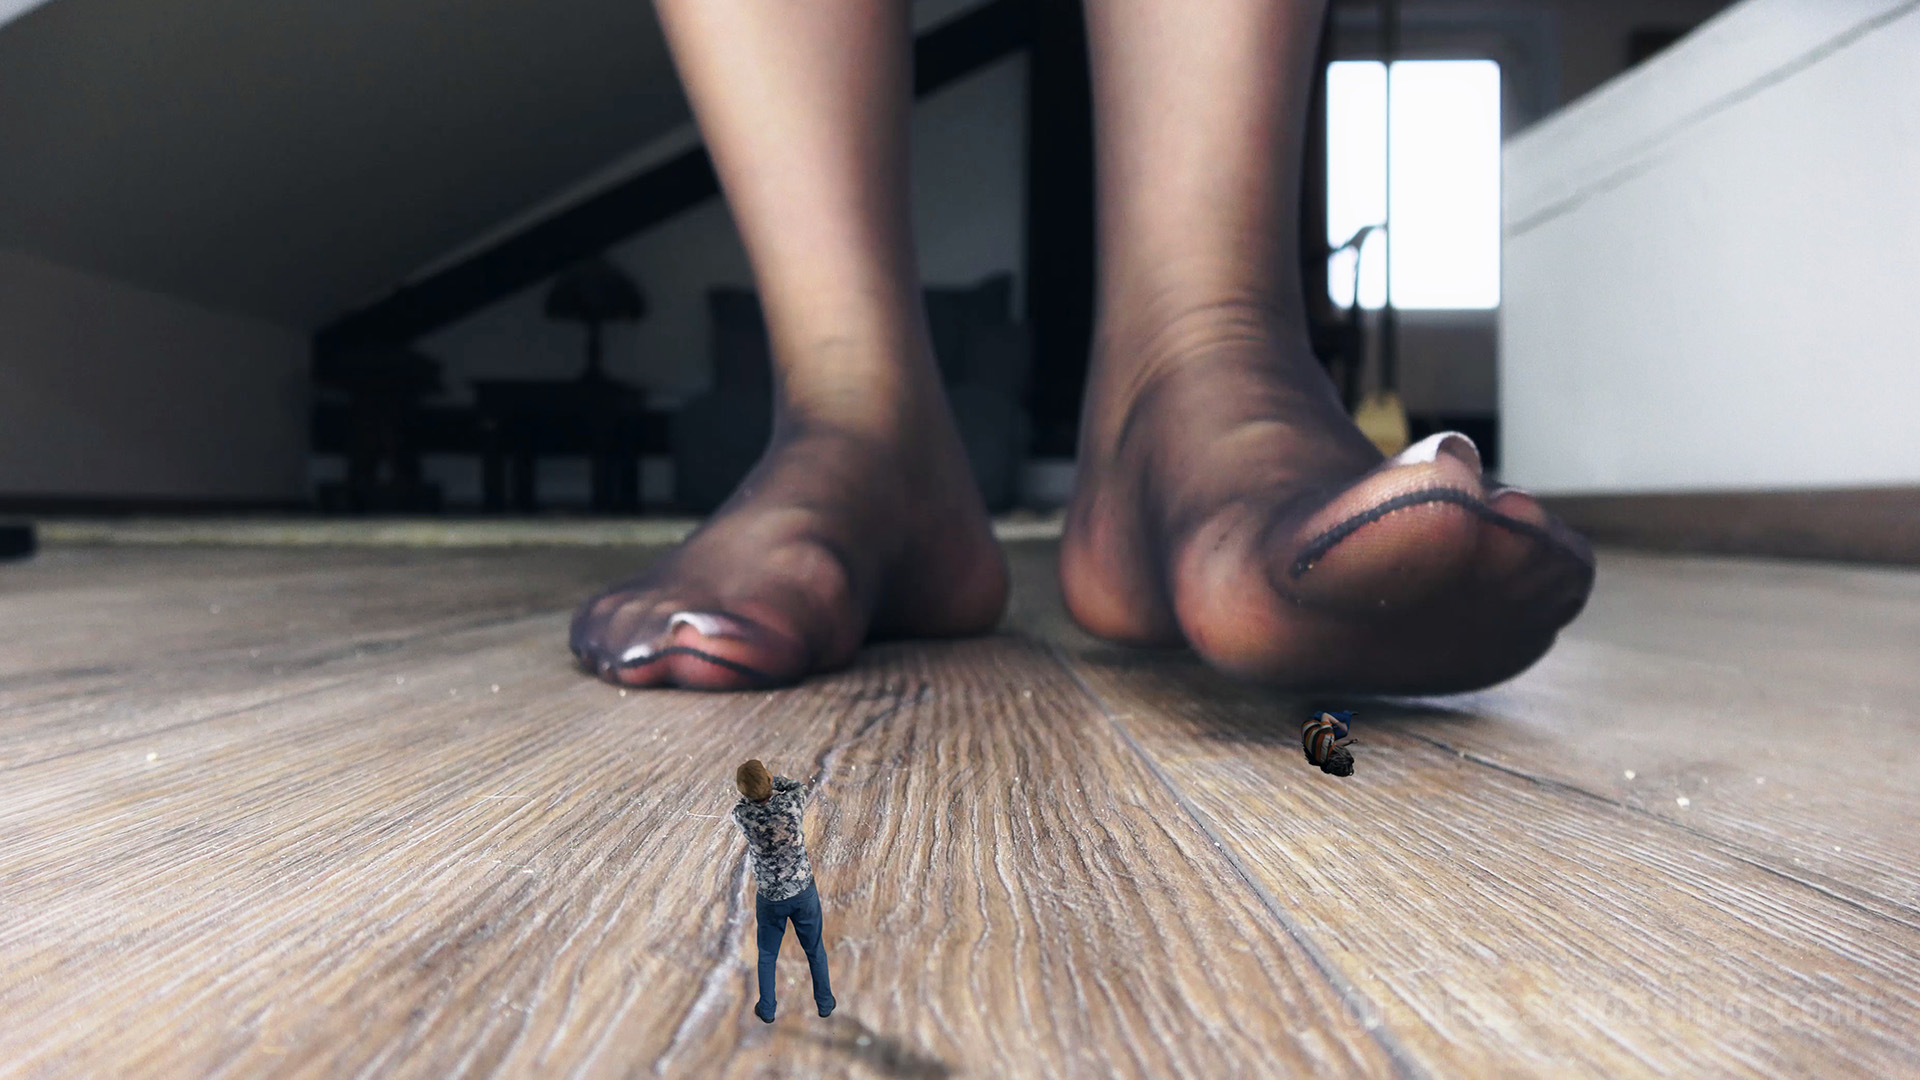 Giantess foot crush